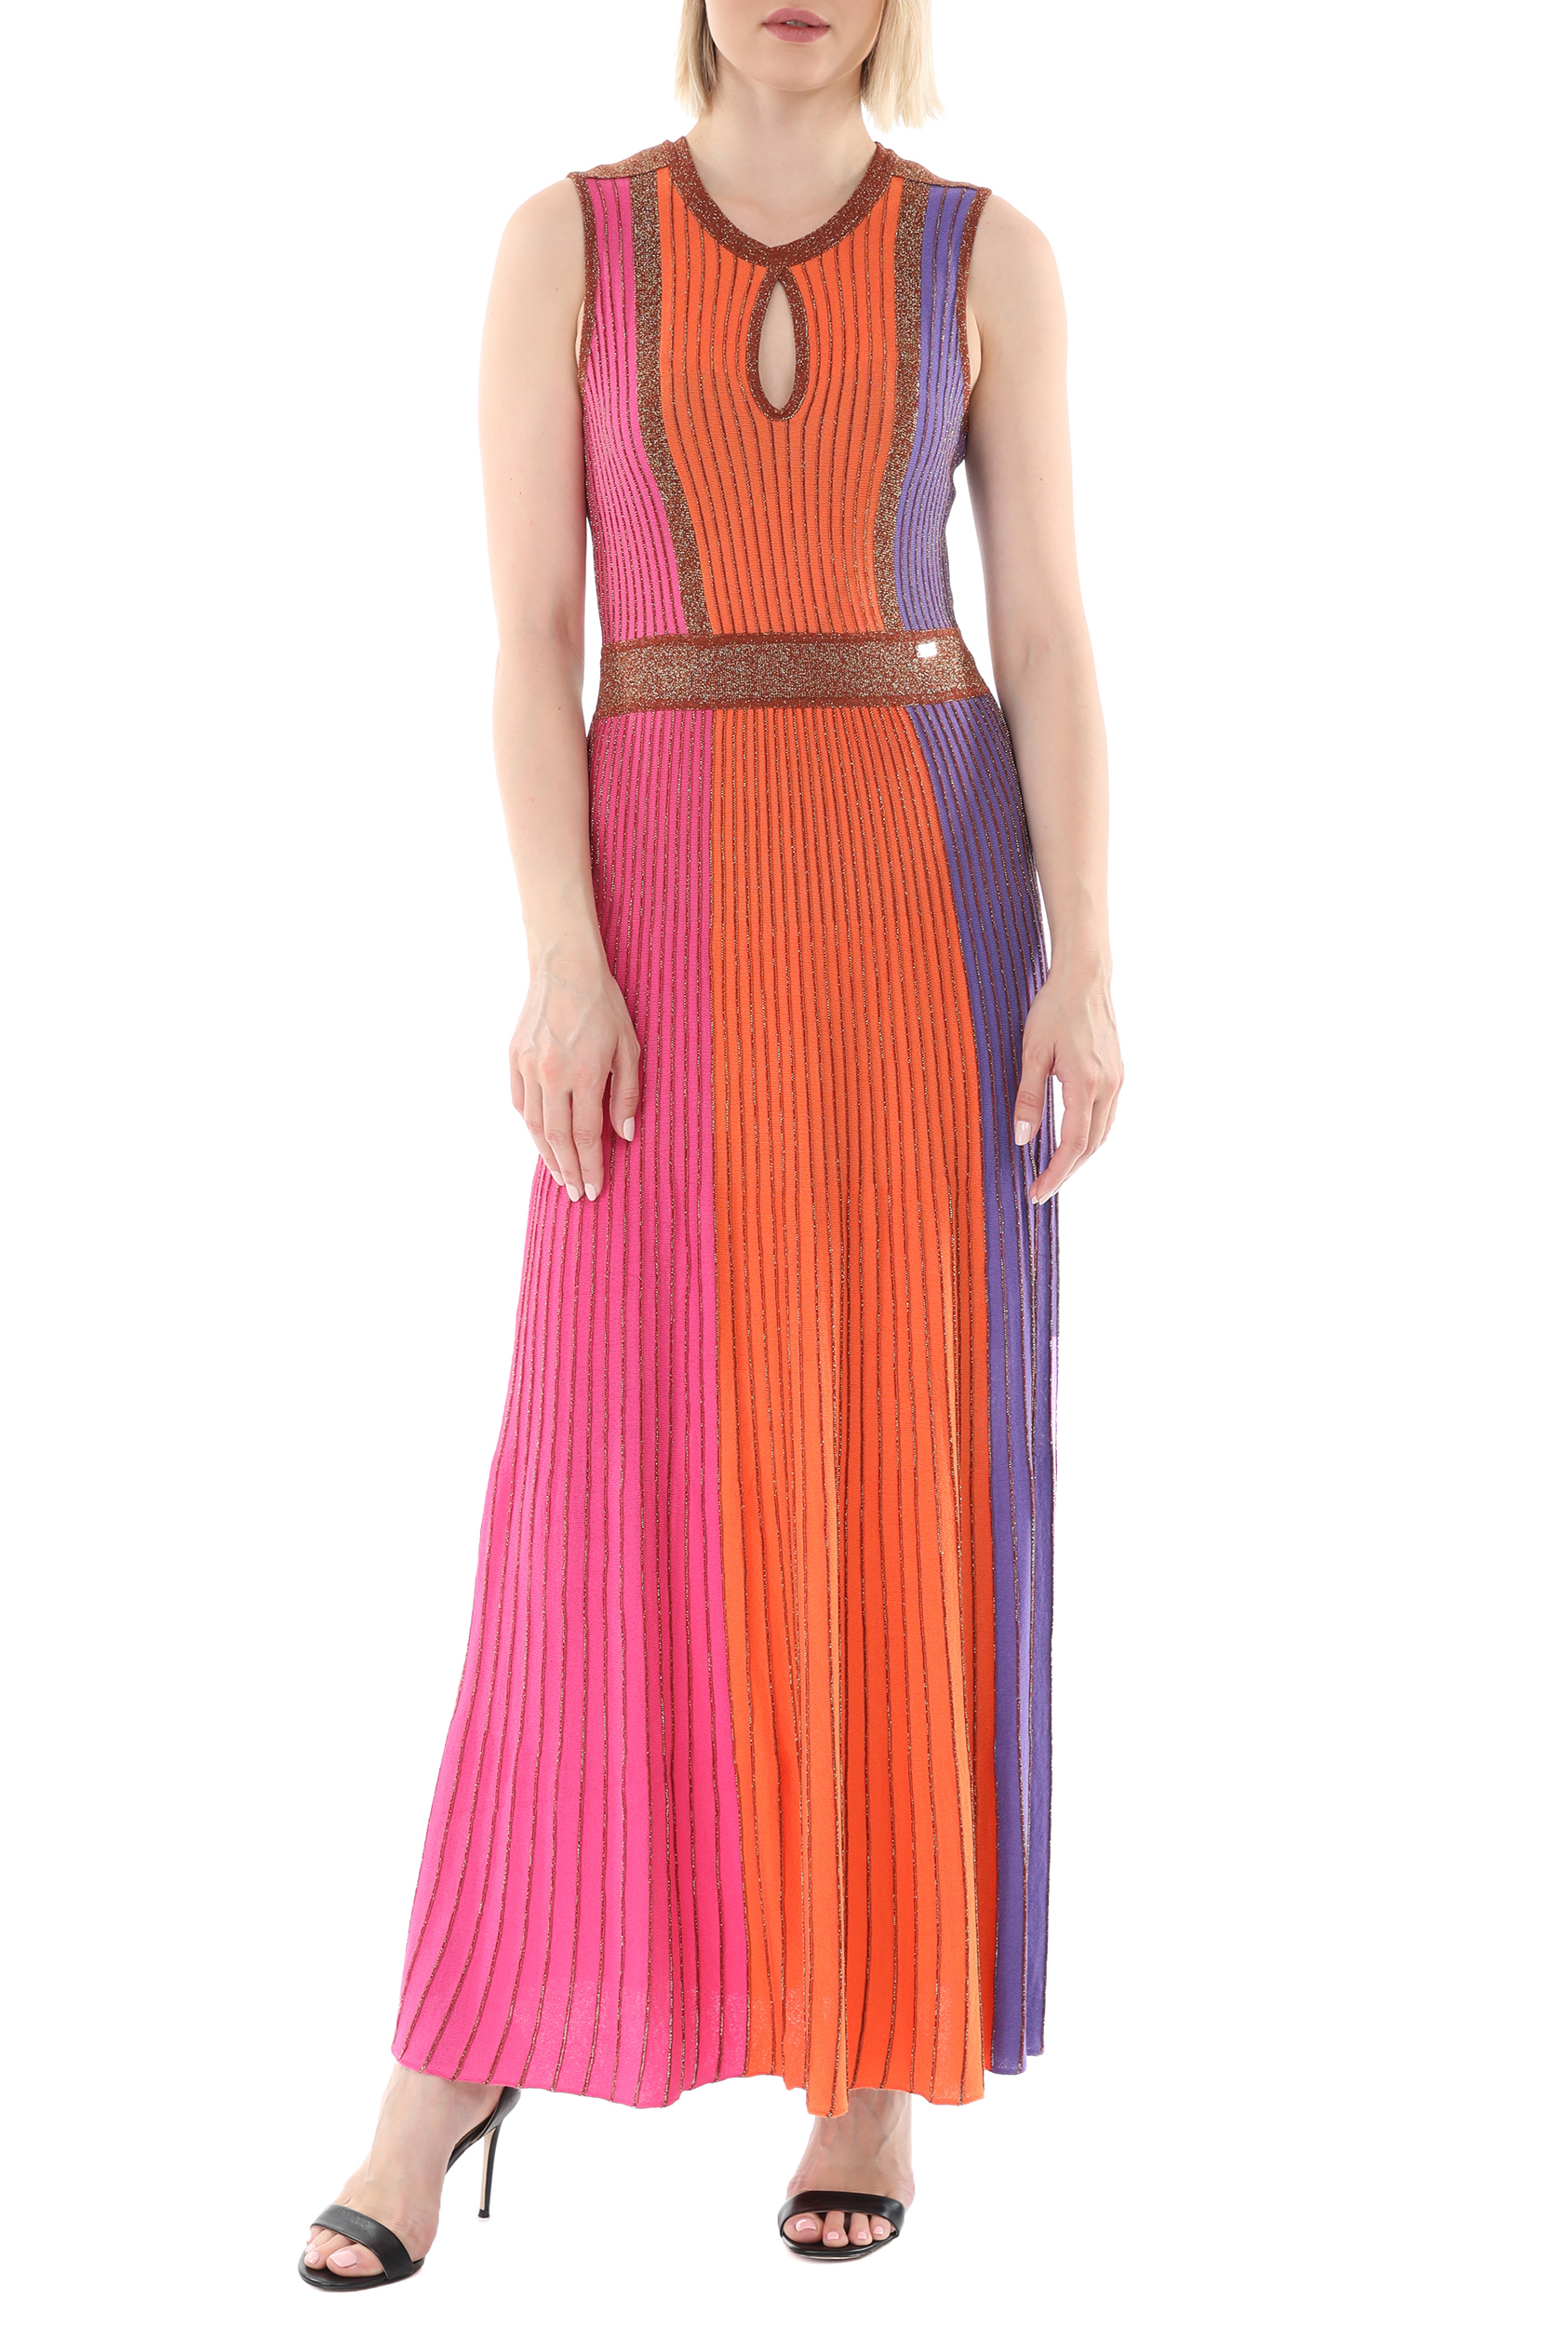 NENETTE Γυναικείο maxi φόρεμα NENETTE TIARA MAGLIA PLISSE φούξια πορτοκαλί μπλε